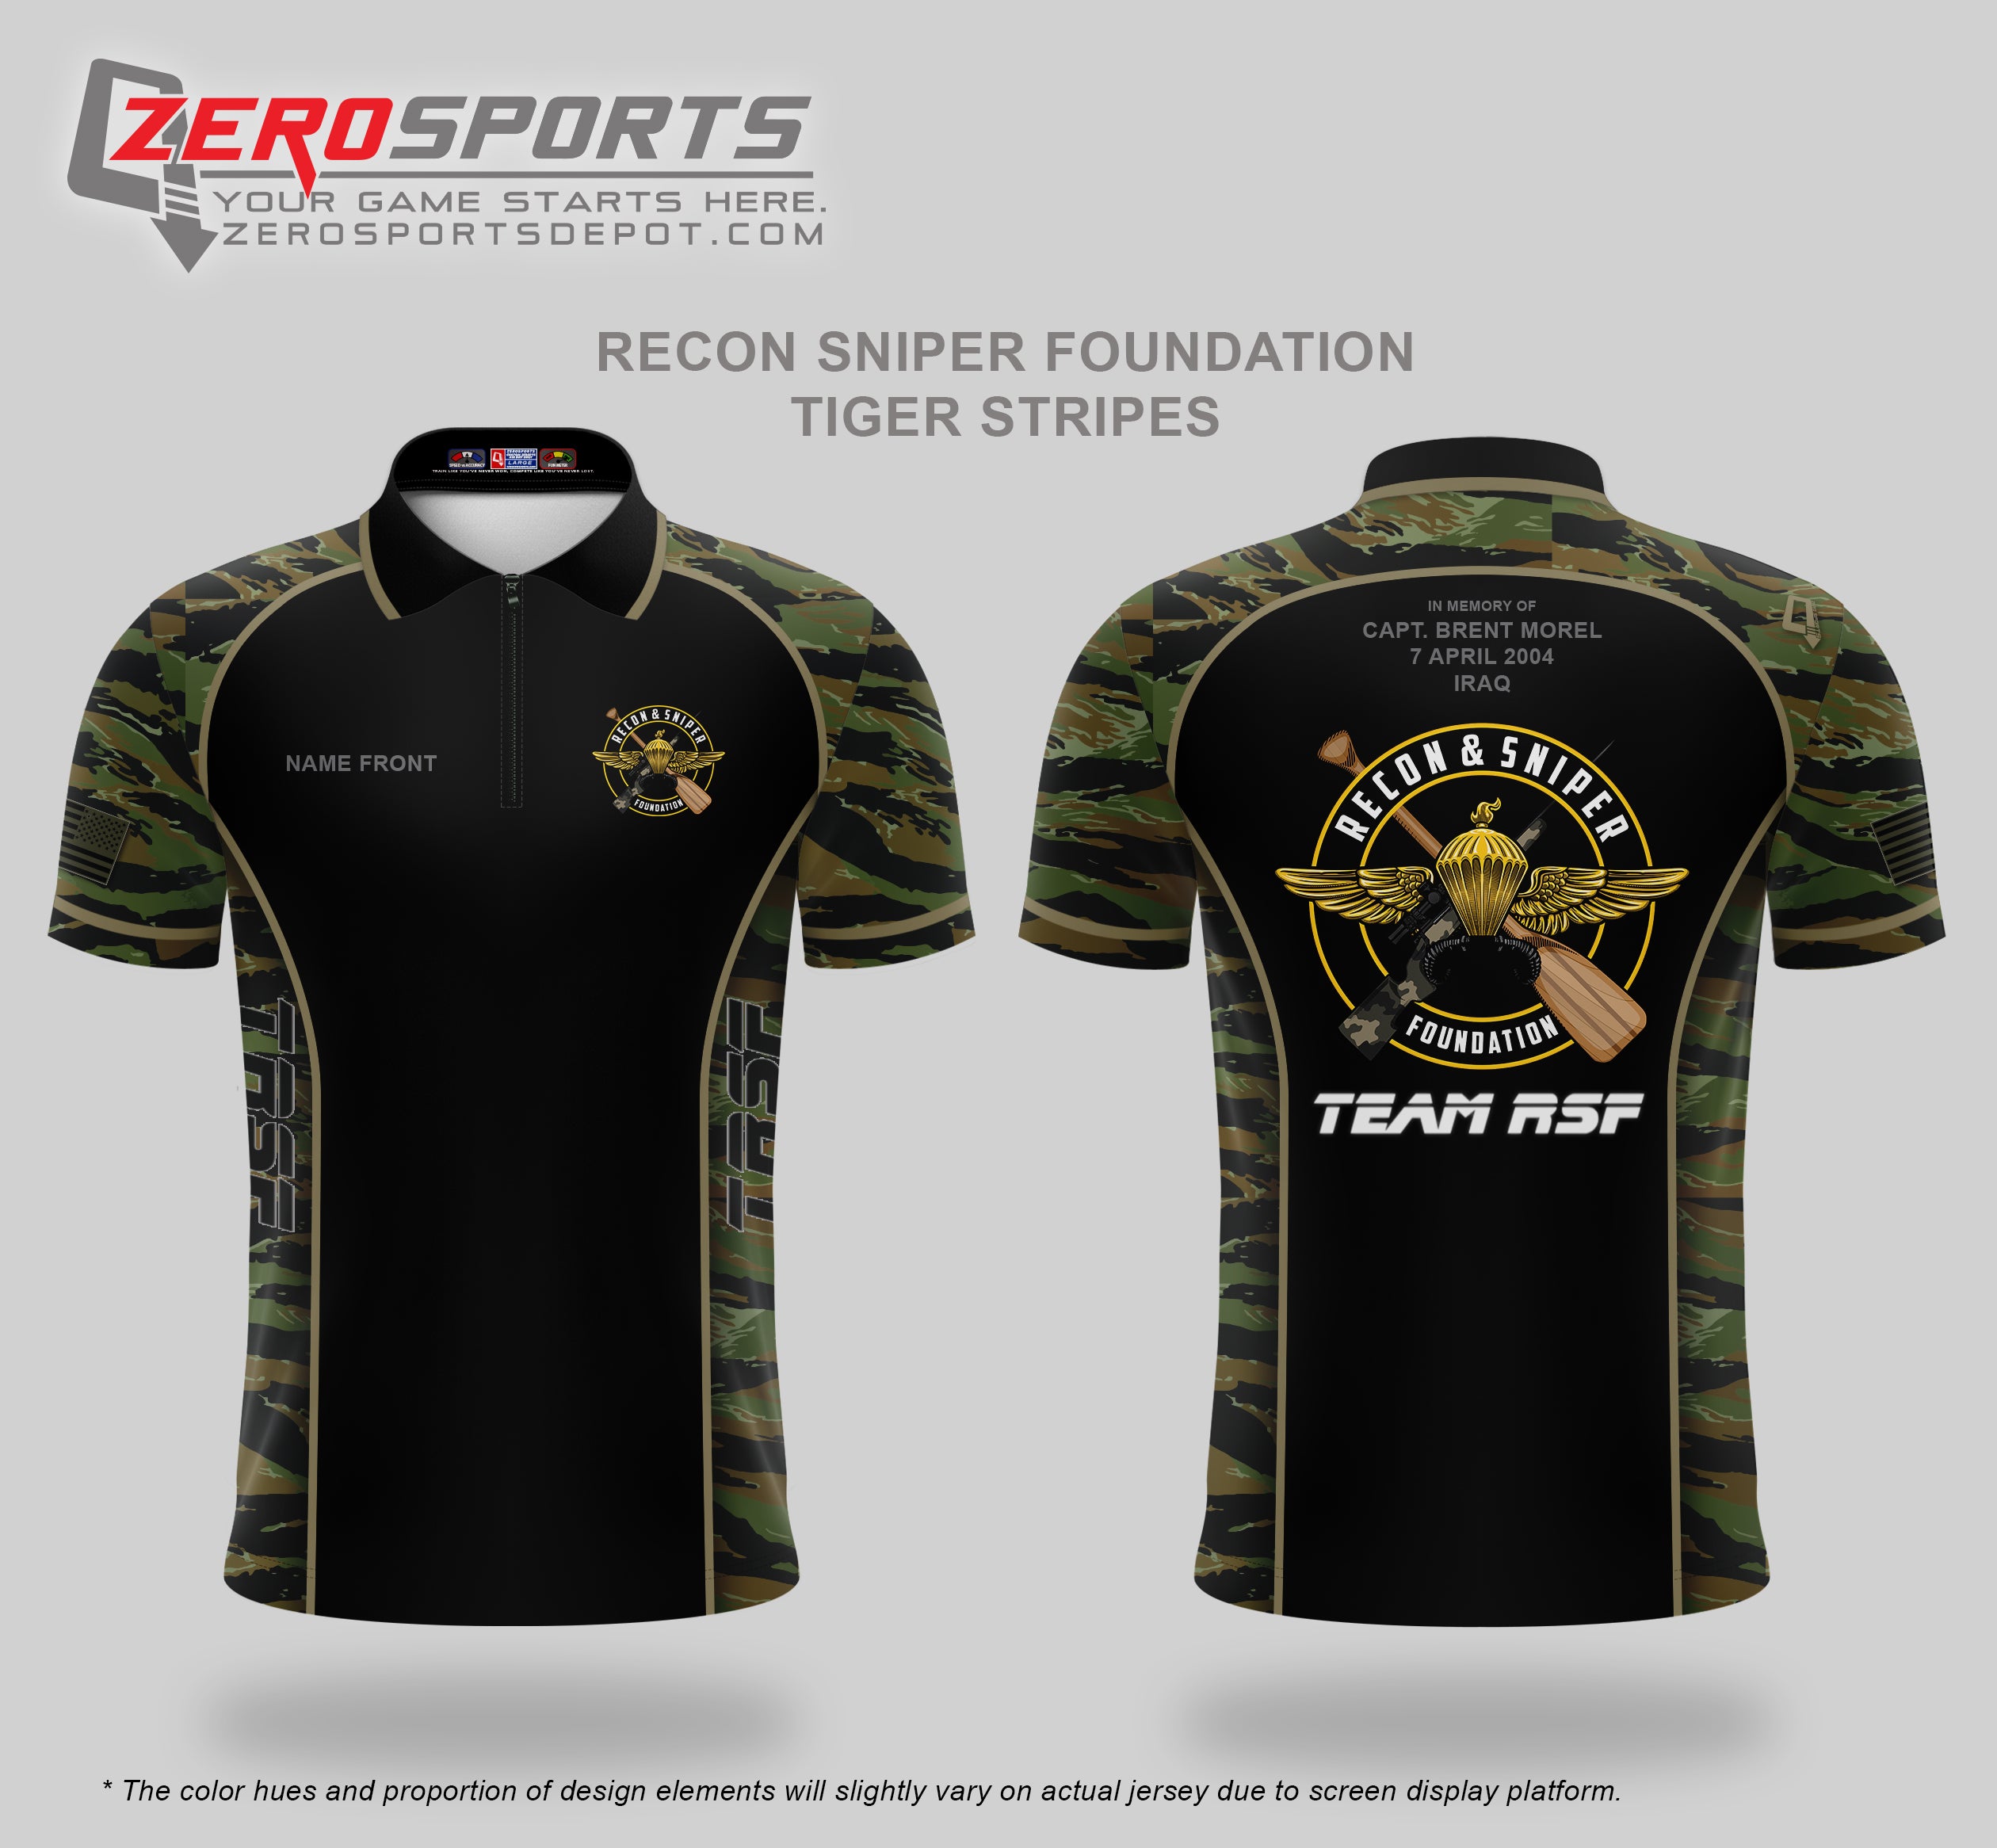 Recon Sniper Foundation Team Jersey